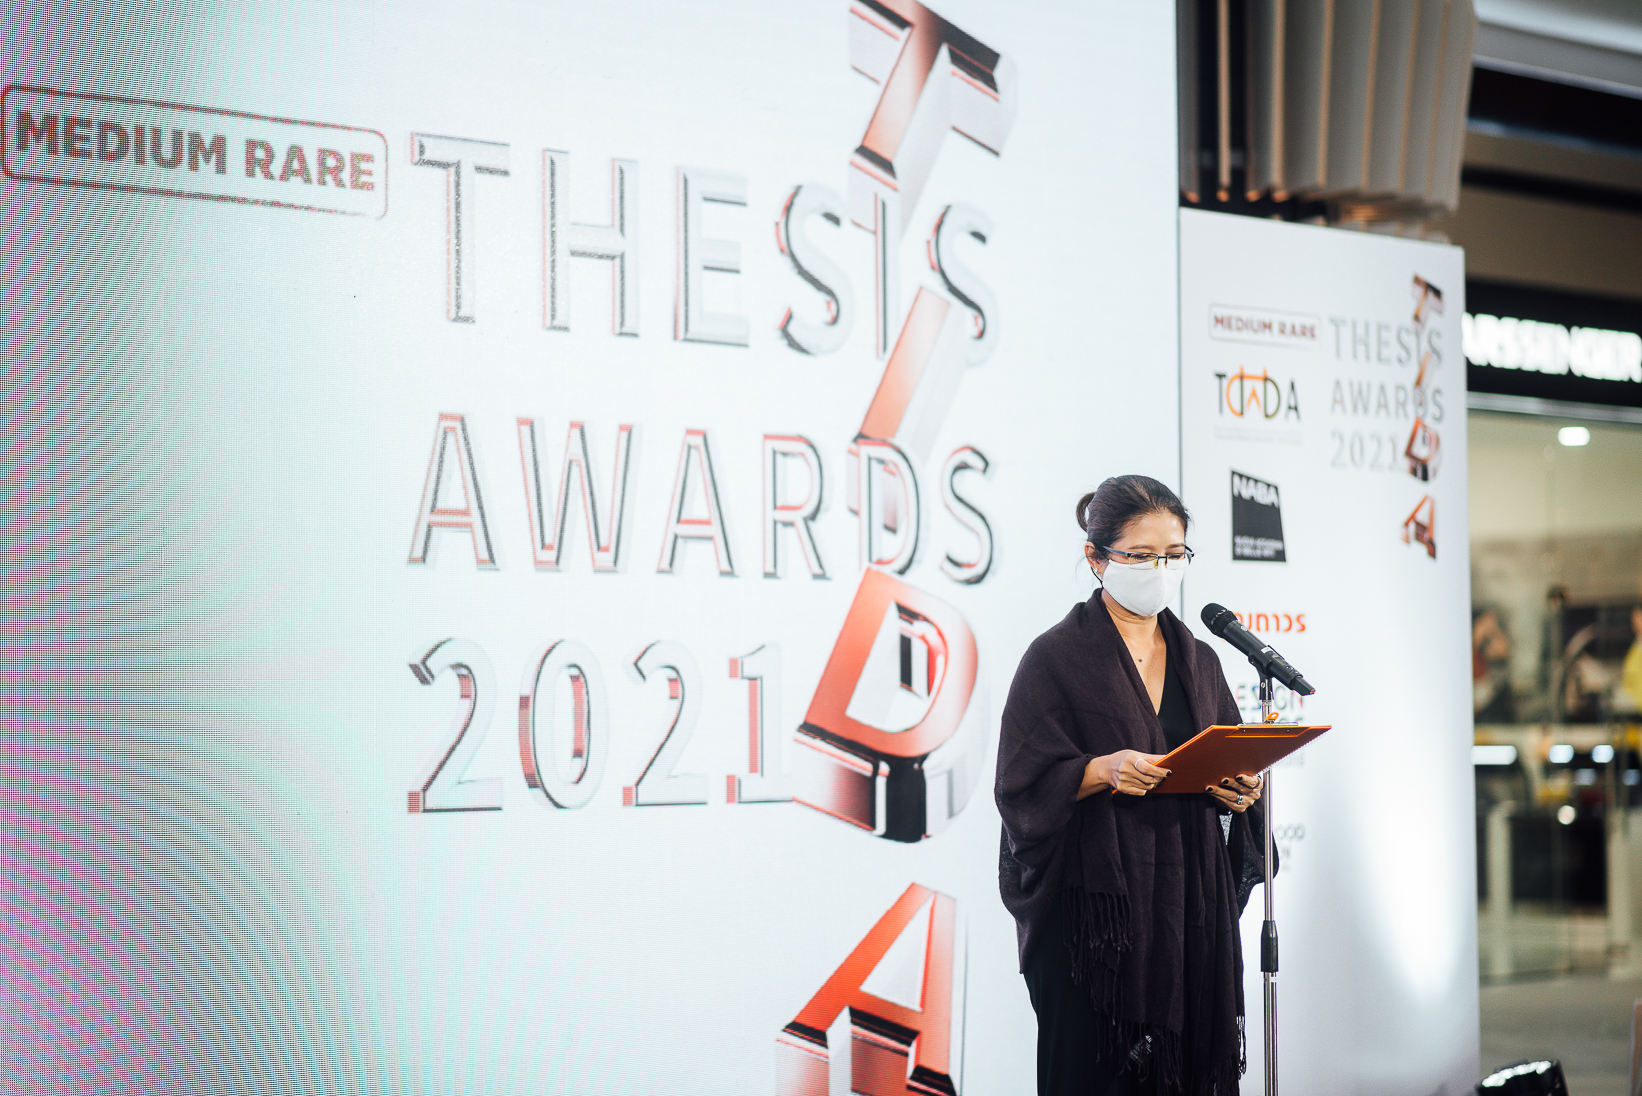 TIDA Thesis Award 2021